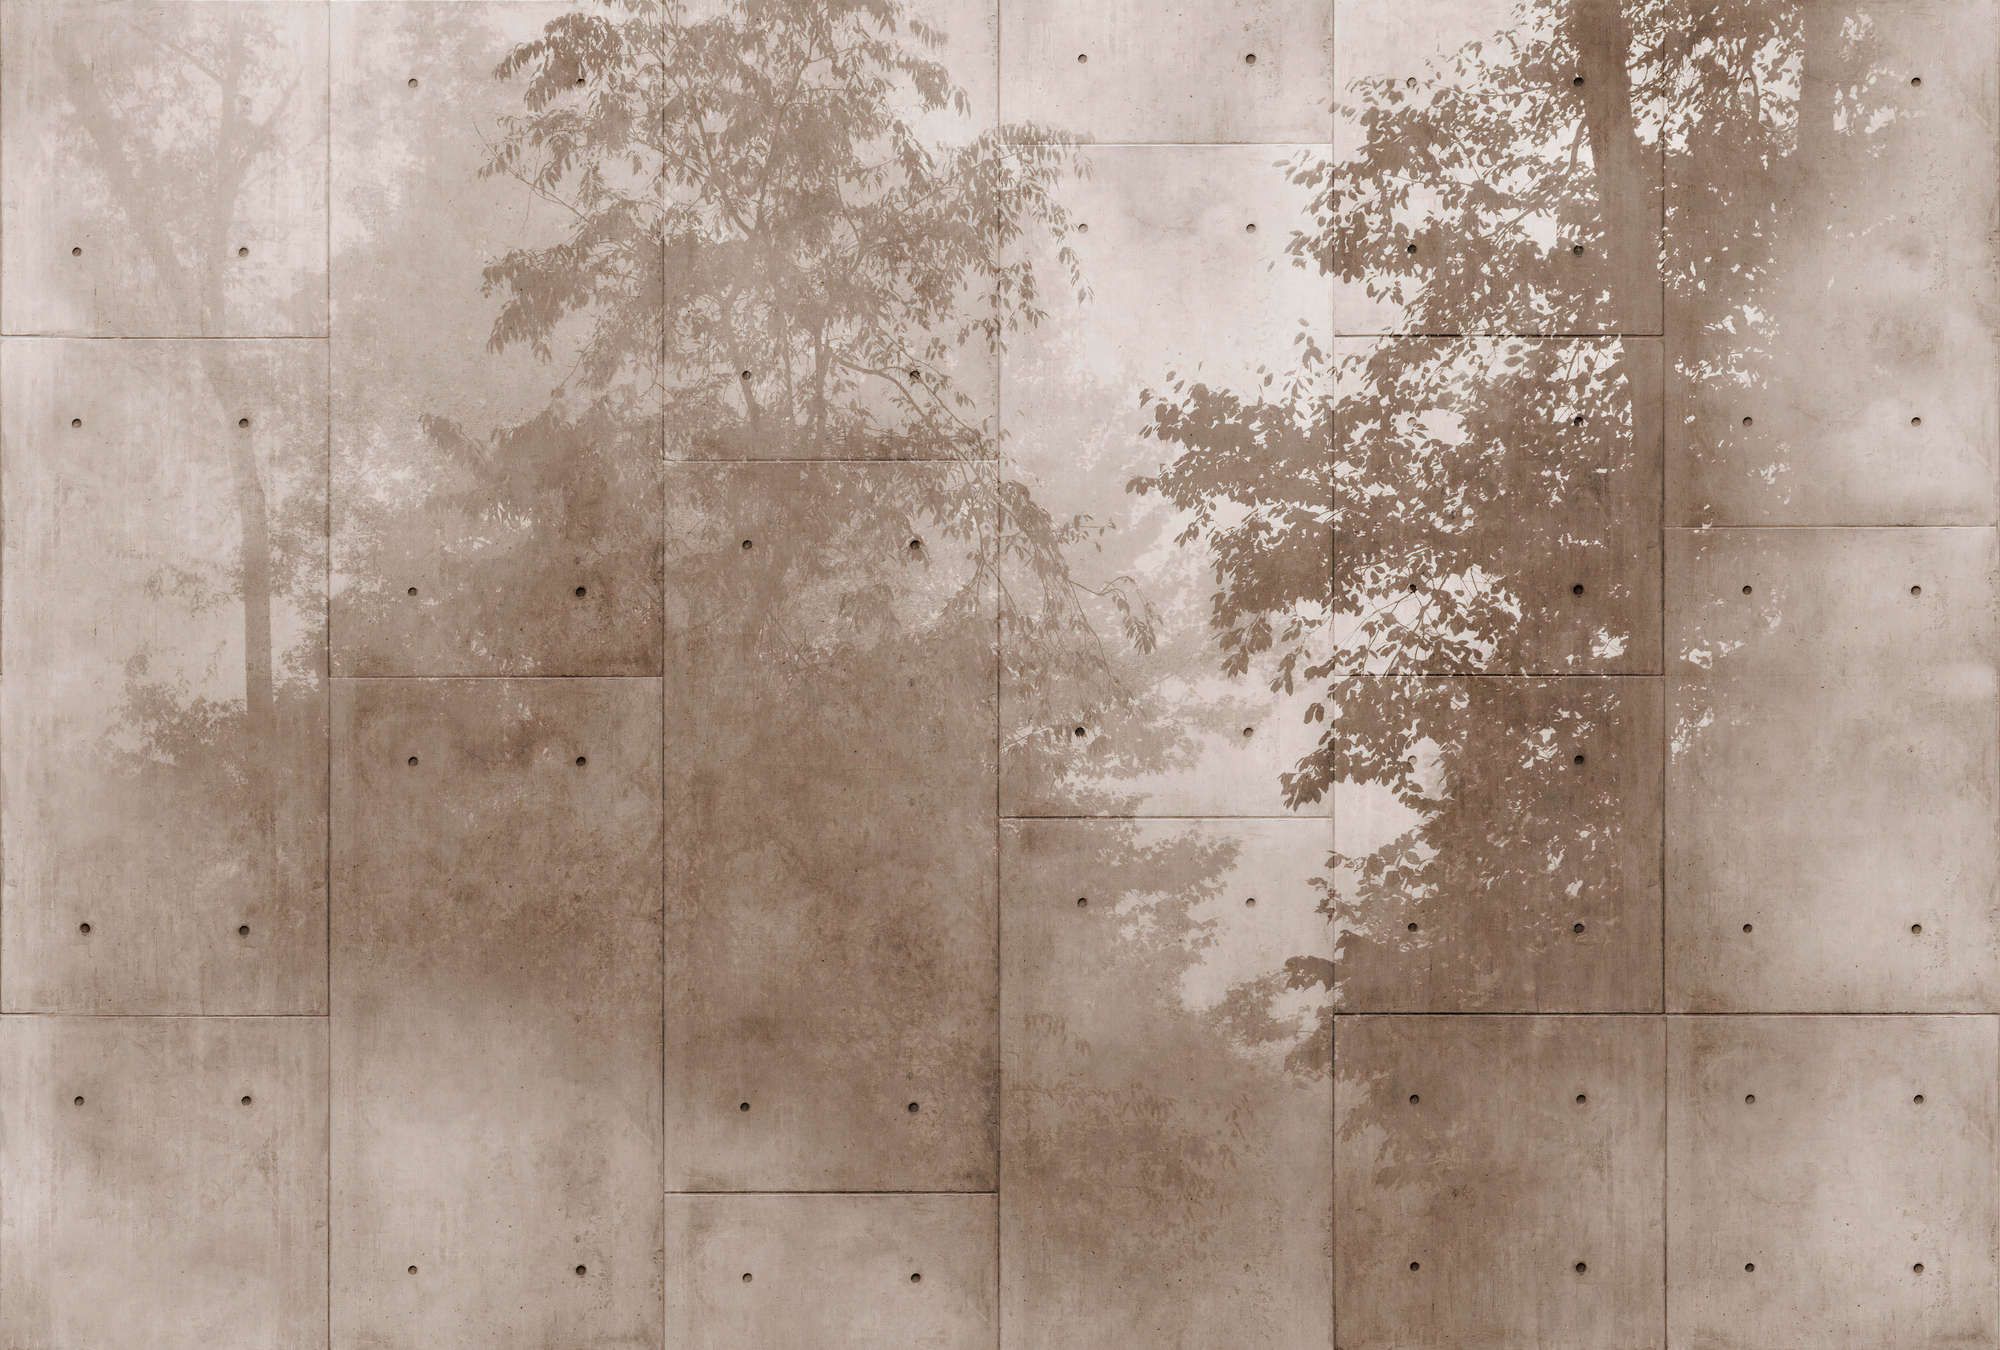             Photo wallpaper »mytho« - Treetops on concrete slabs - Smooth, slightly shiny premium non-woven fabric
        